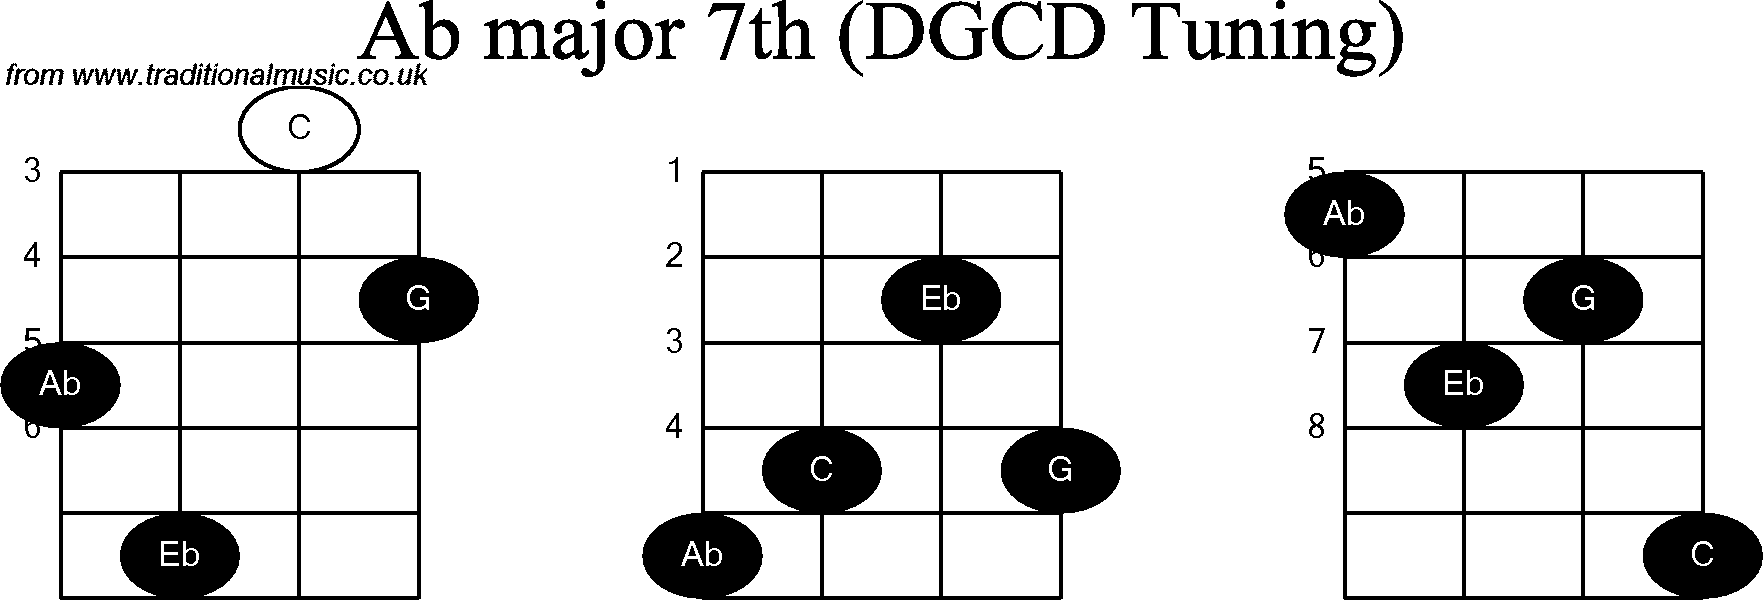 Chord diagrams for Banjo(G Modal) Ab Major7th